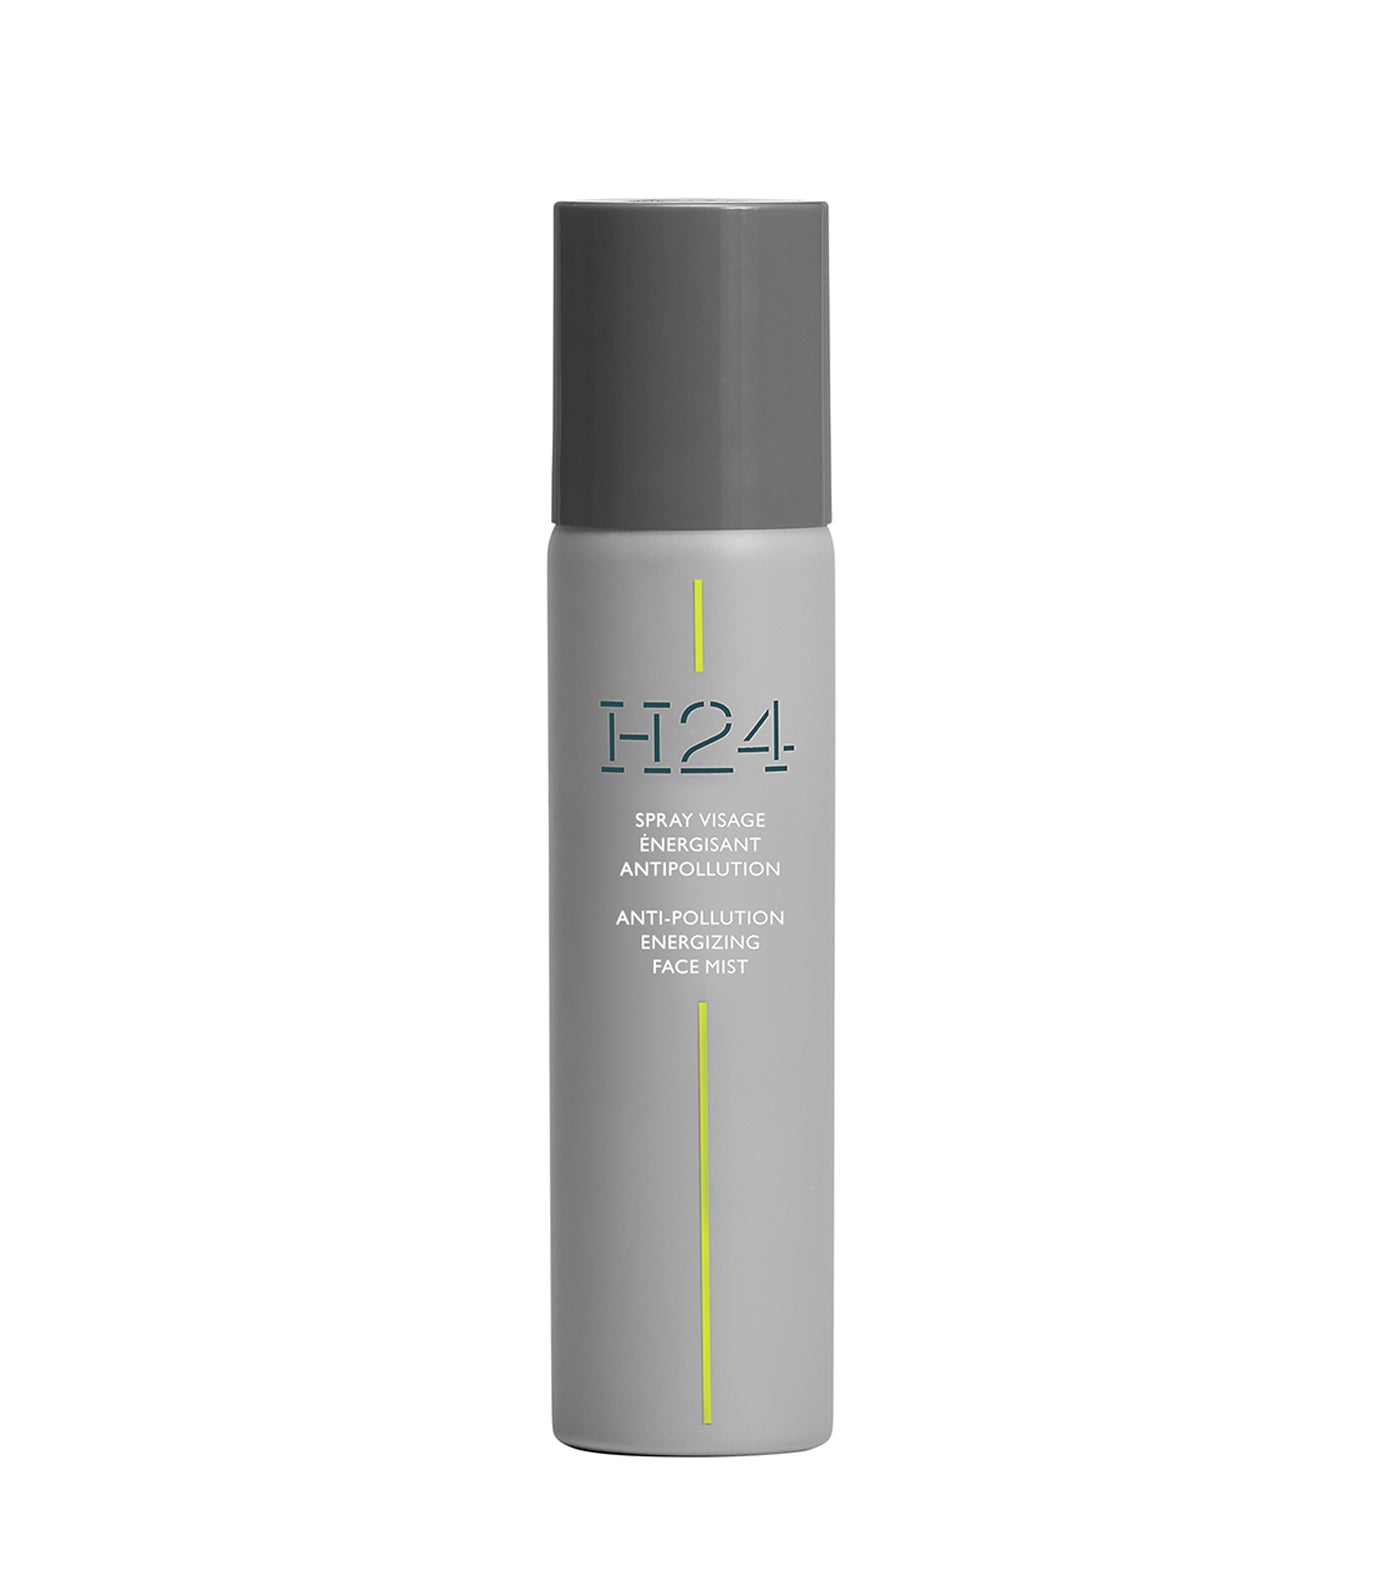 H24, energizing anti-pollution face spray 100ml